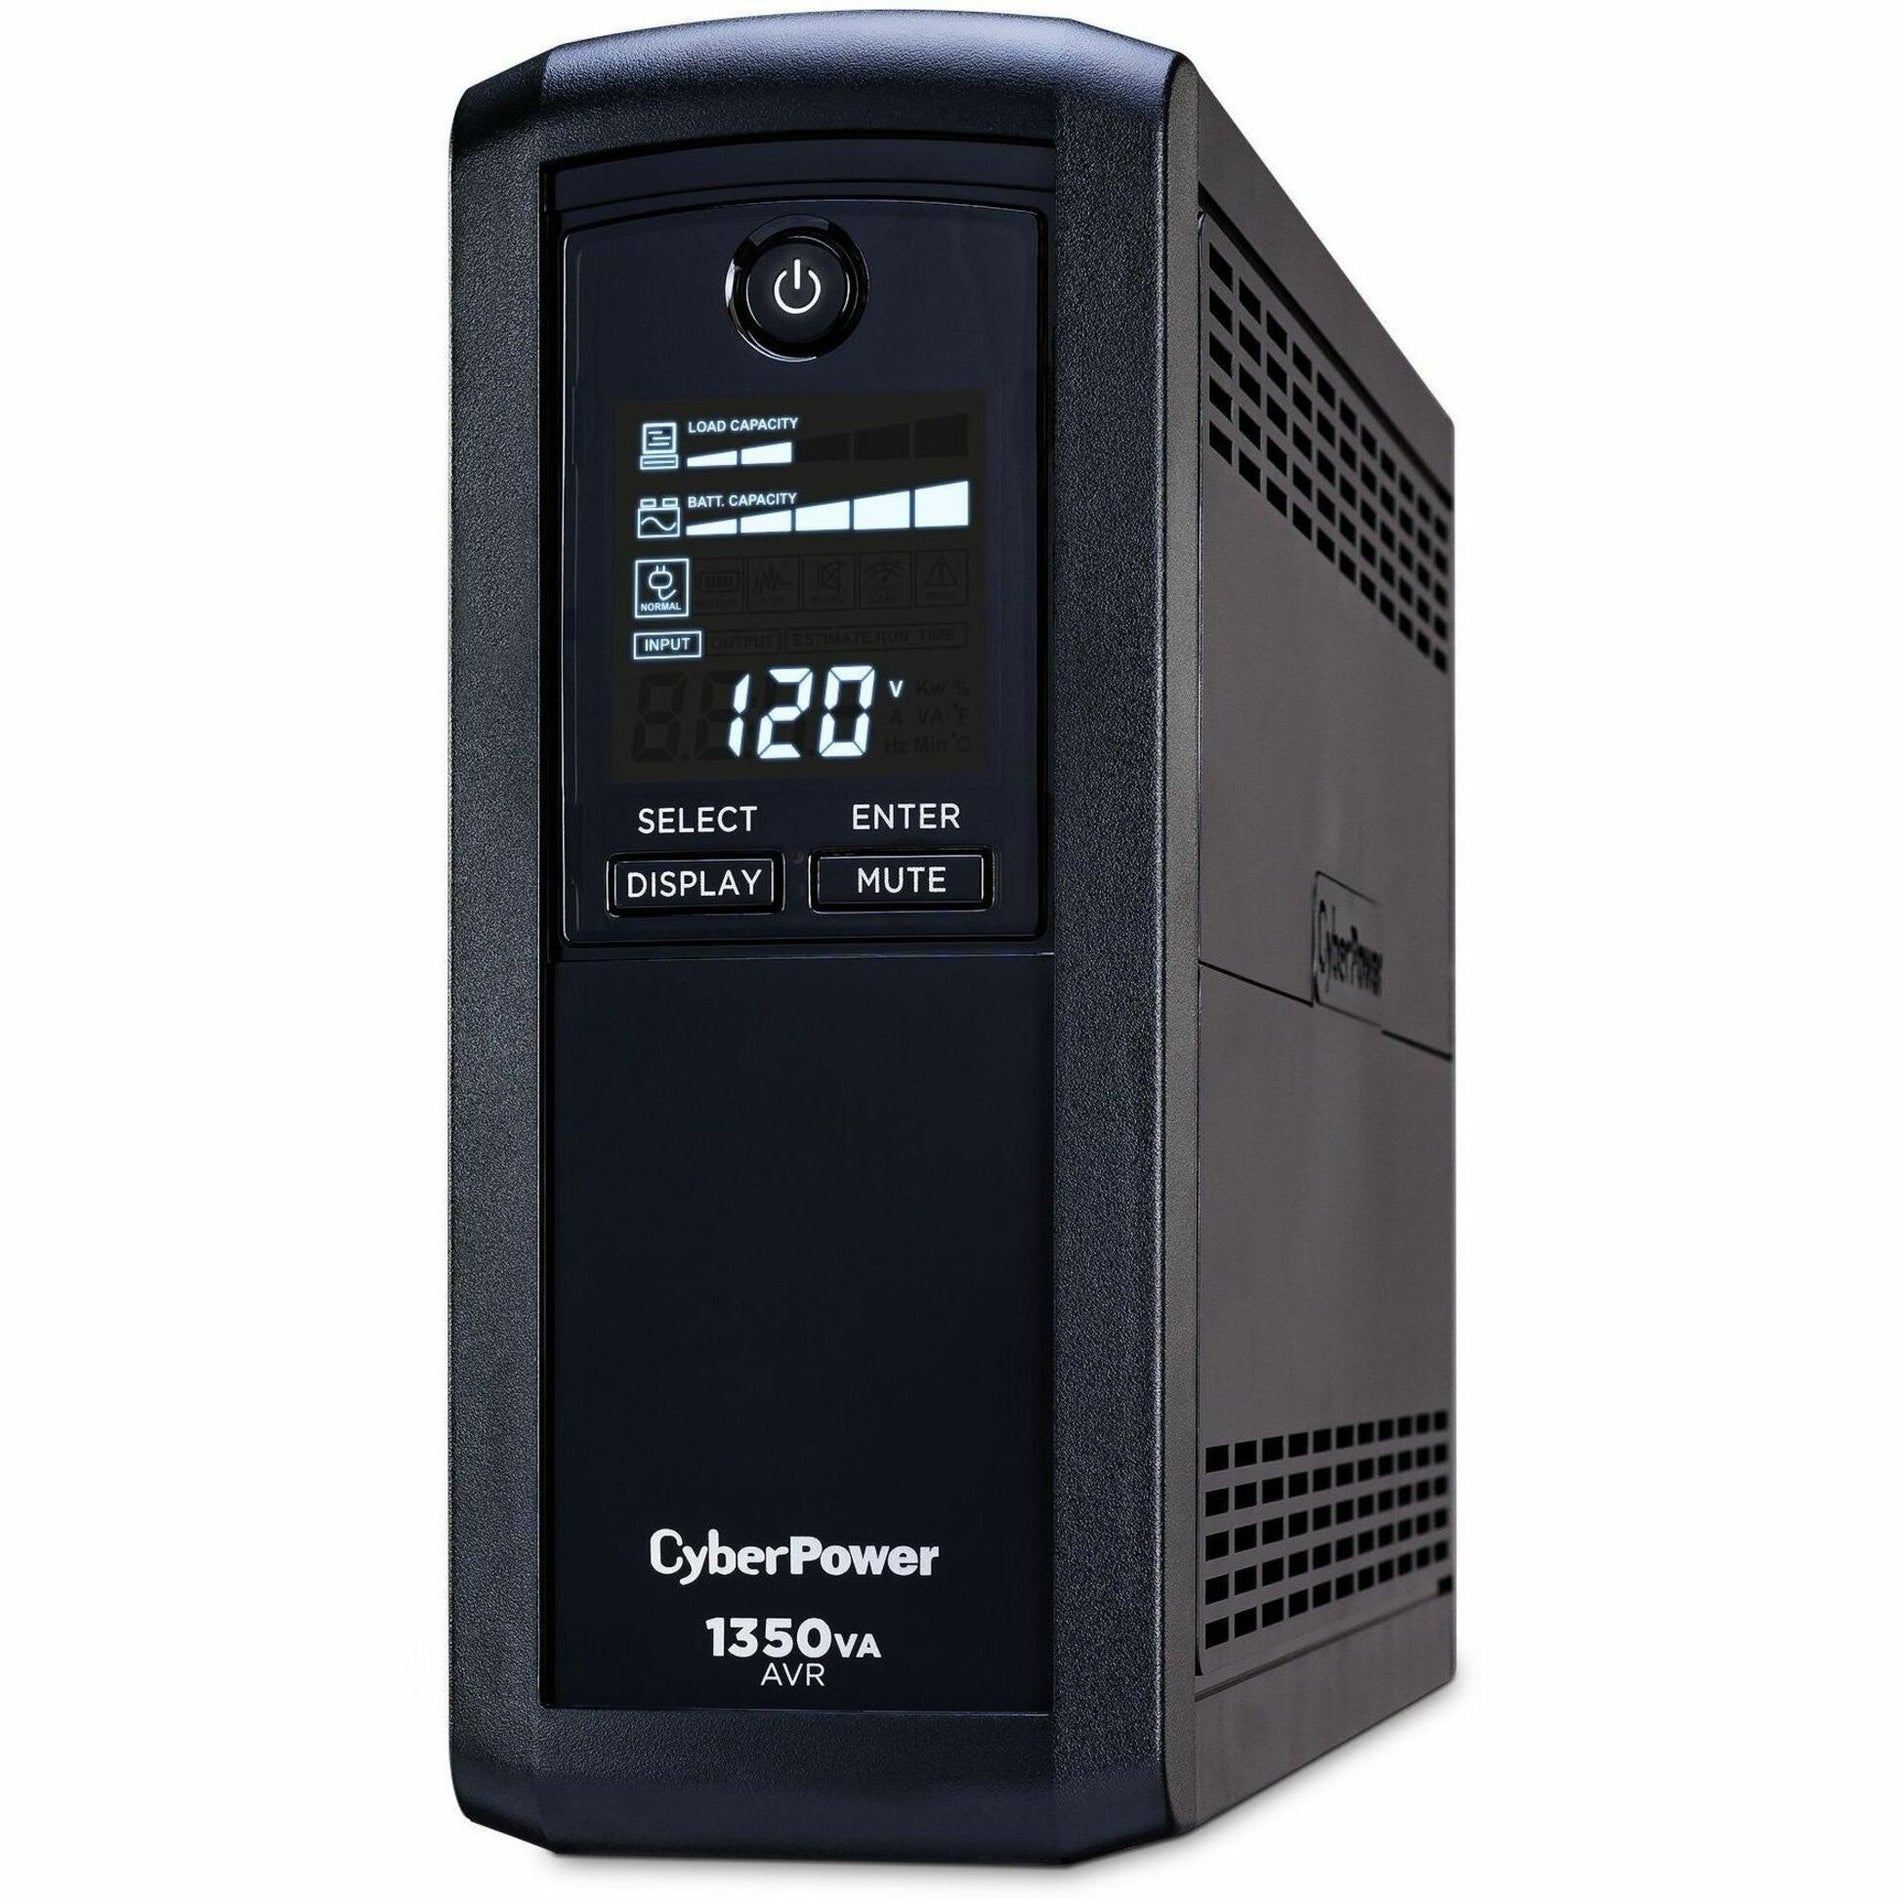 CyberPower CP1350AVRLCD3 Intelligent LCD UPS, 1350VA Mini-tower UPS, 3 Year Warranty, Energy Star, RoHS Certified